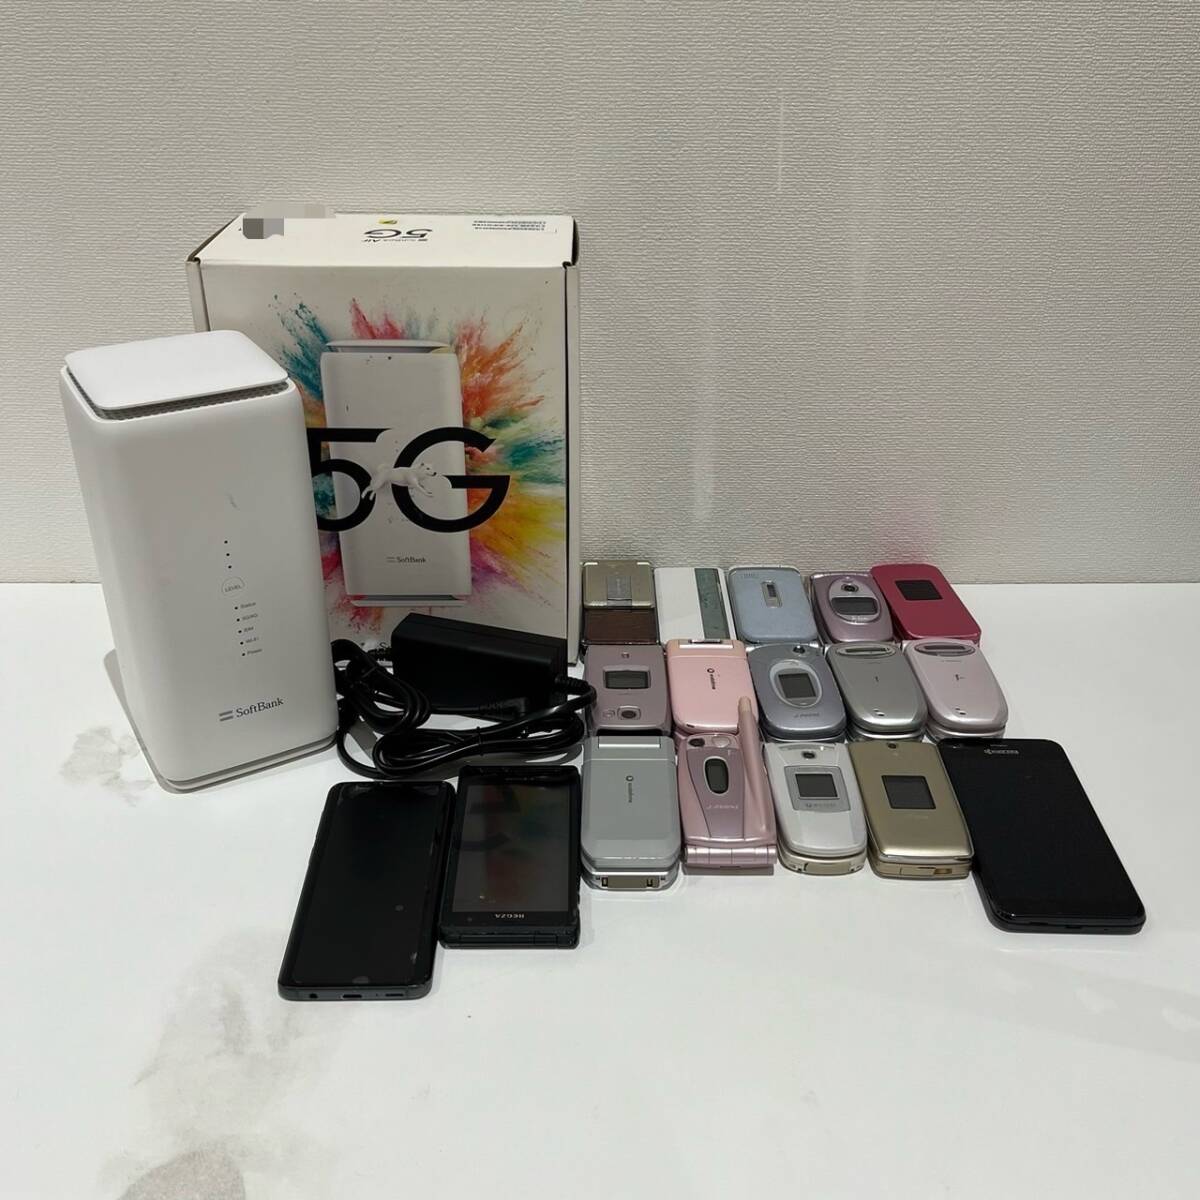 [AMT-10193a]1 иен ~ смартфон galake-. суммировать docomo Galaxy KYOCERA REGZA SoftBank Air 5G мобильный телефон коллекция Old утиль 